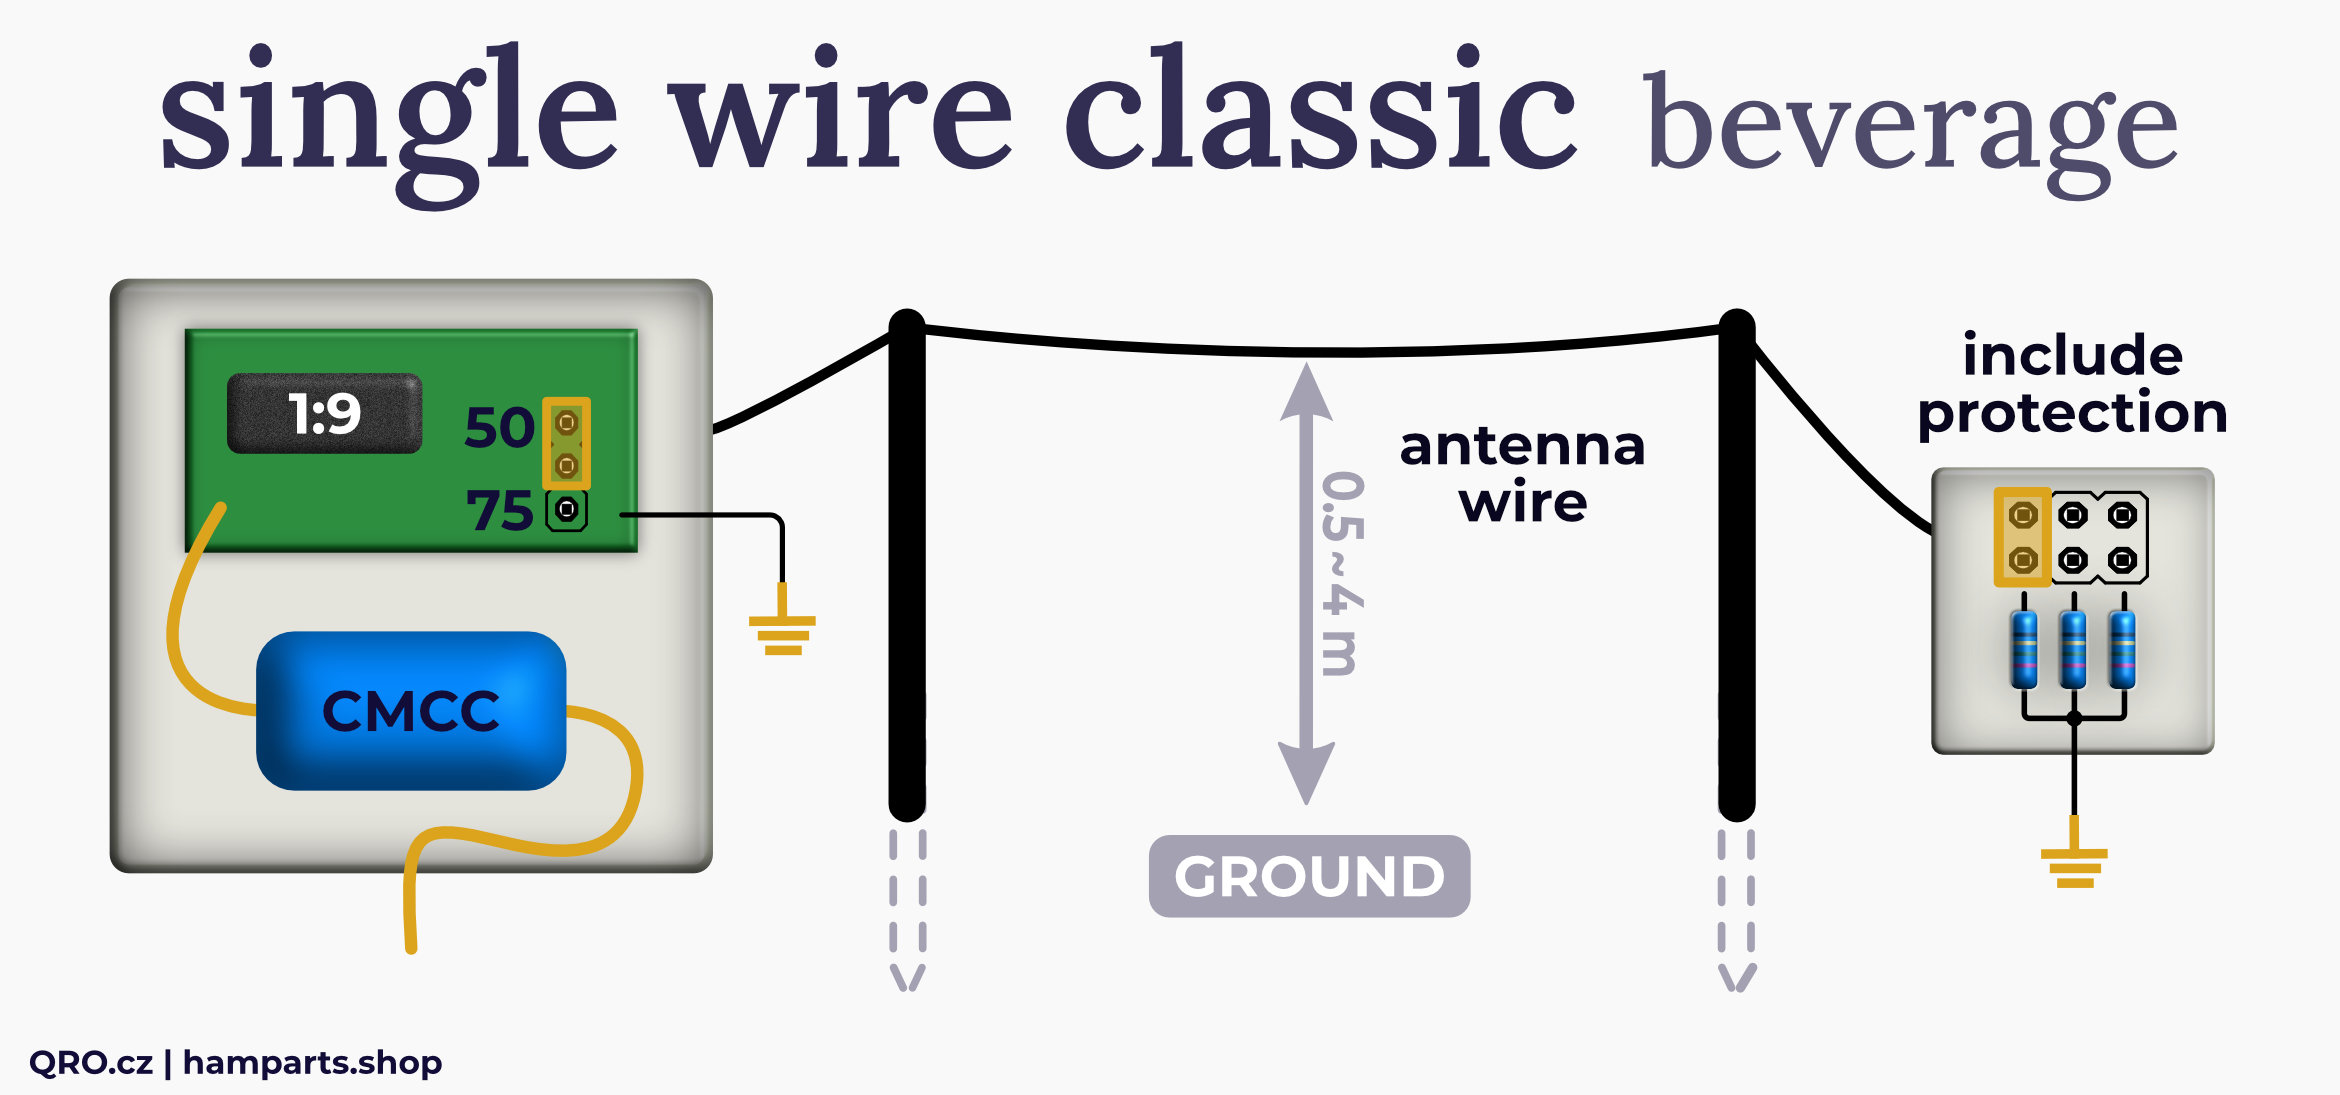 single wire classic by qro.cz hamparts.shop